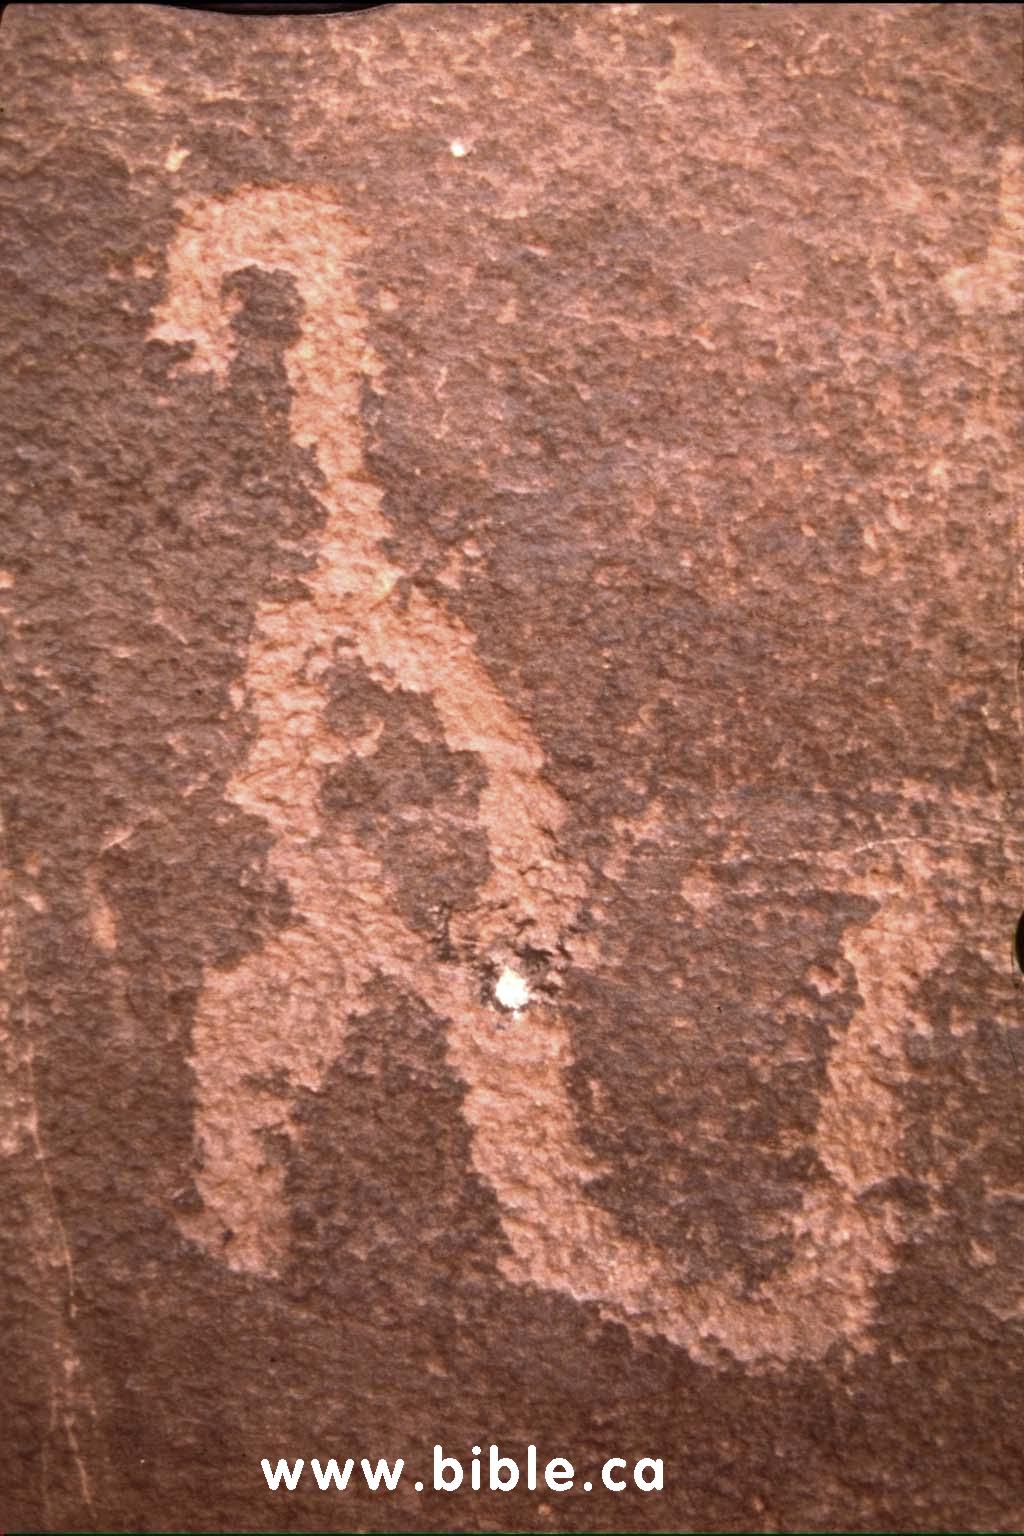 Havasupai-Dino-Petroglyph.jpg